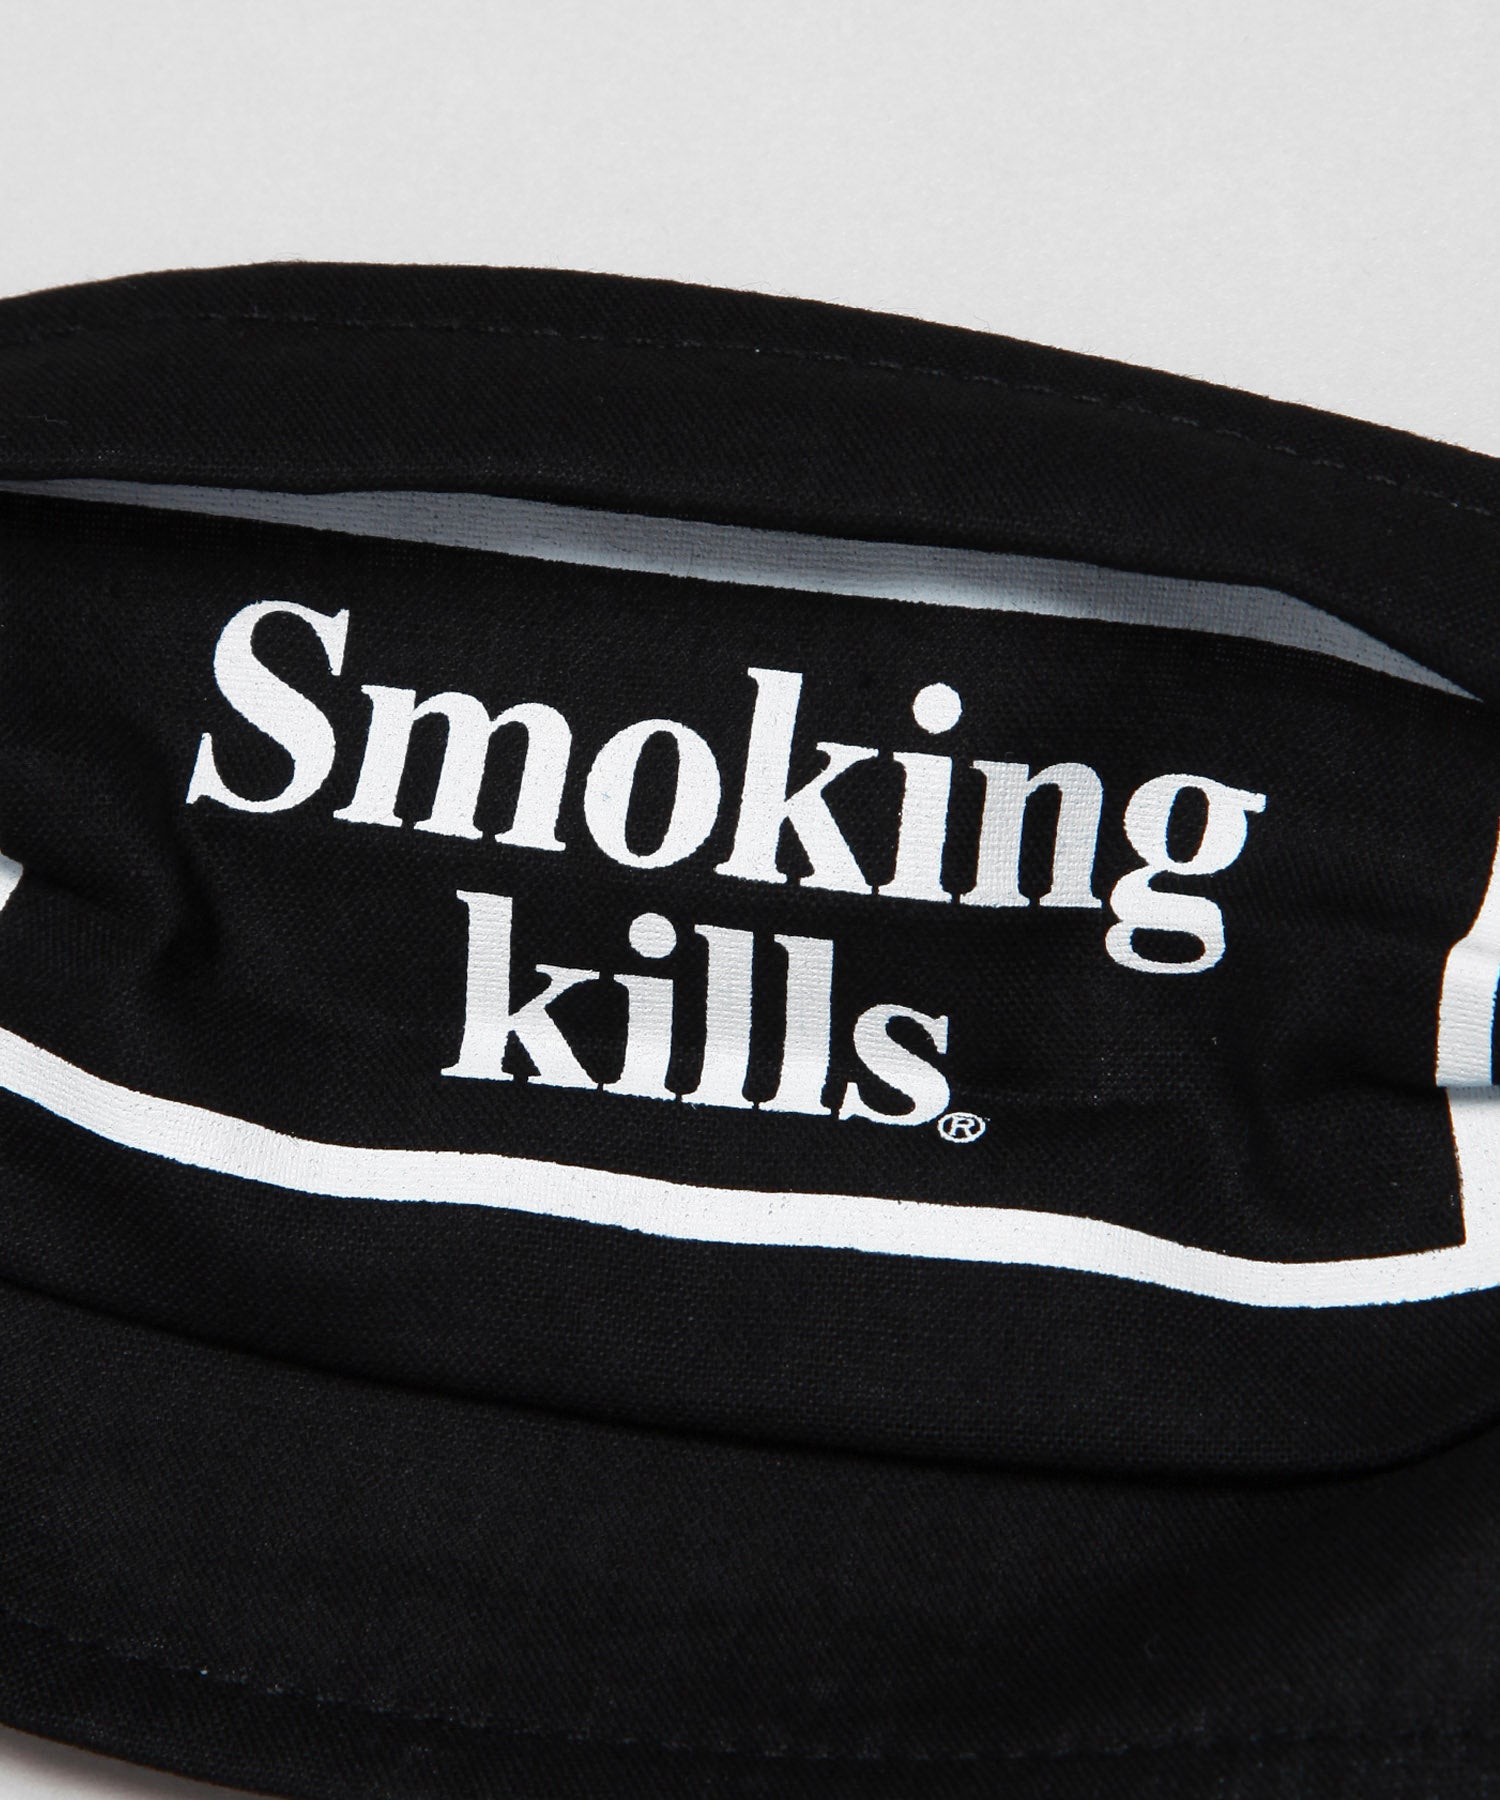 Smoking kills LOGO MASK [FRA229]